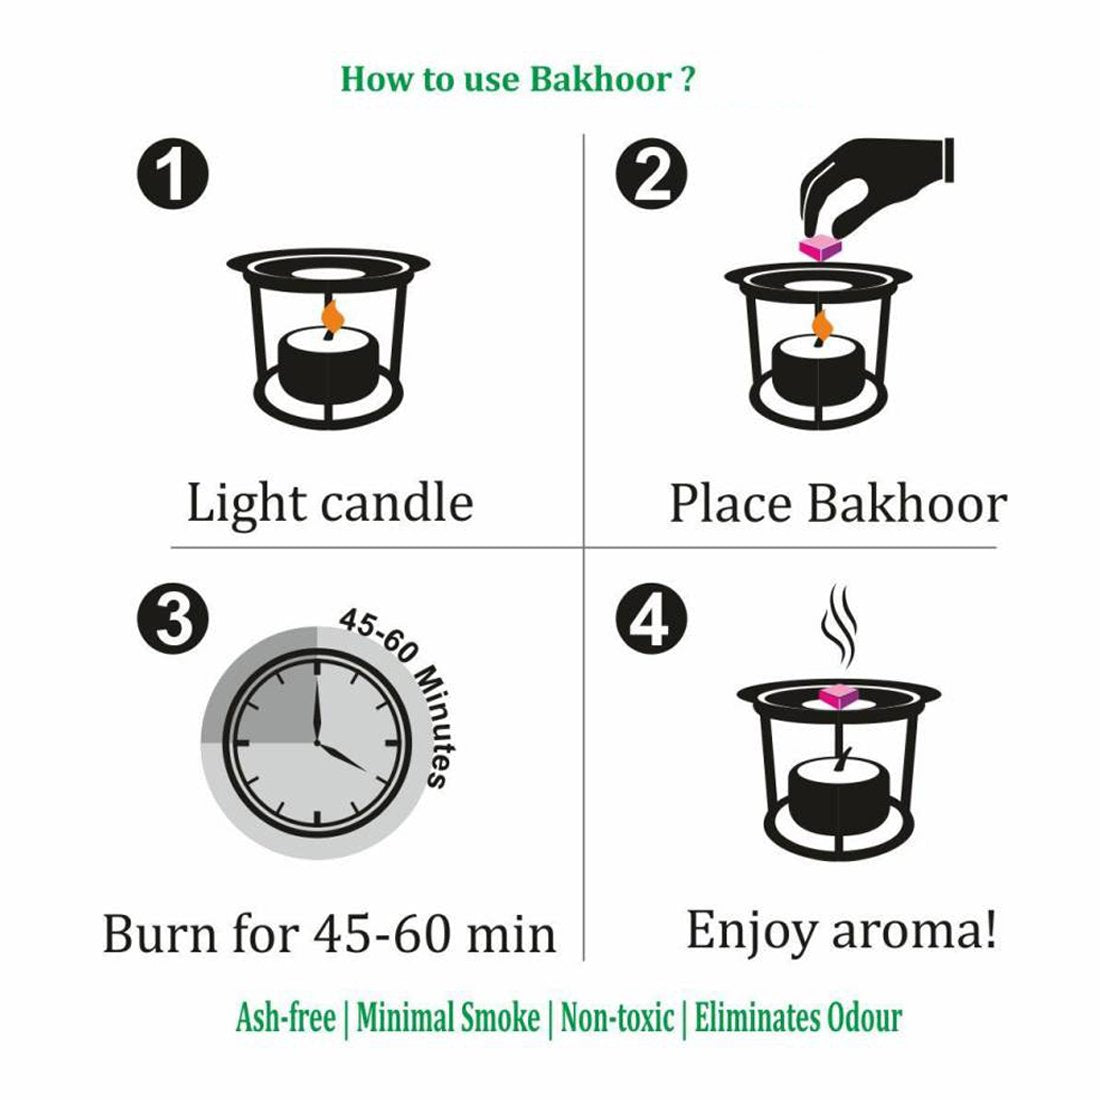 Al Haramain Bukhoor Sedra & Watani Bakhoor Burners Fragrance Paste Combo Pack of 2